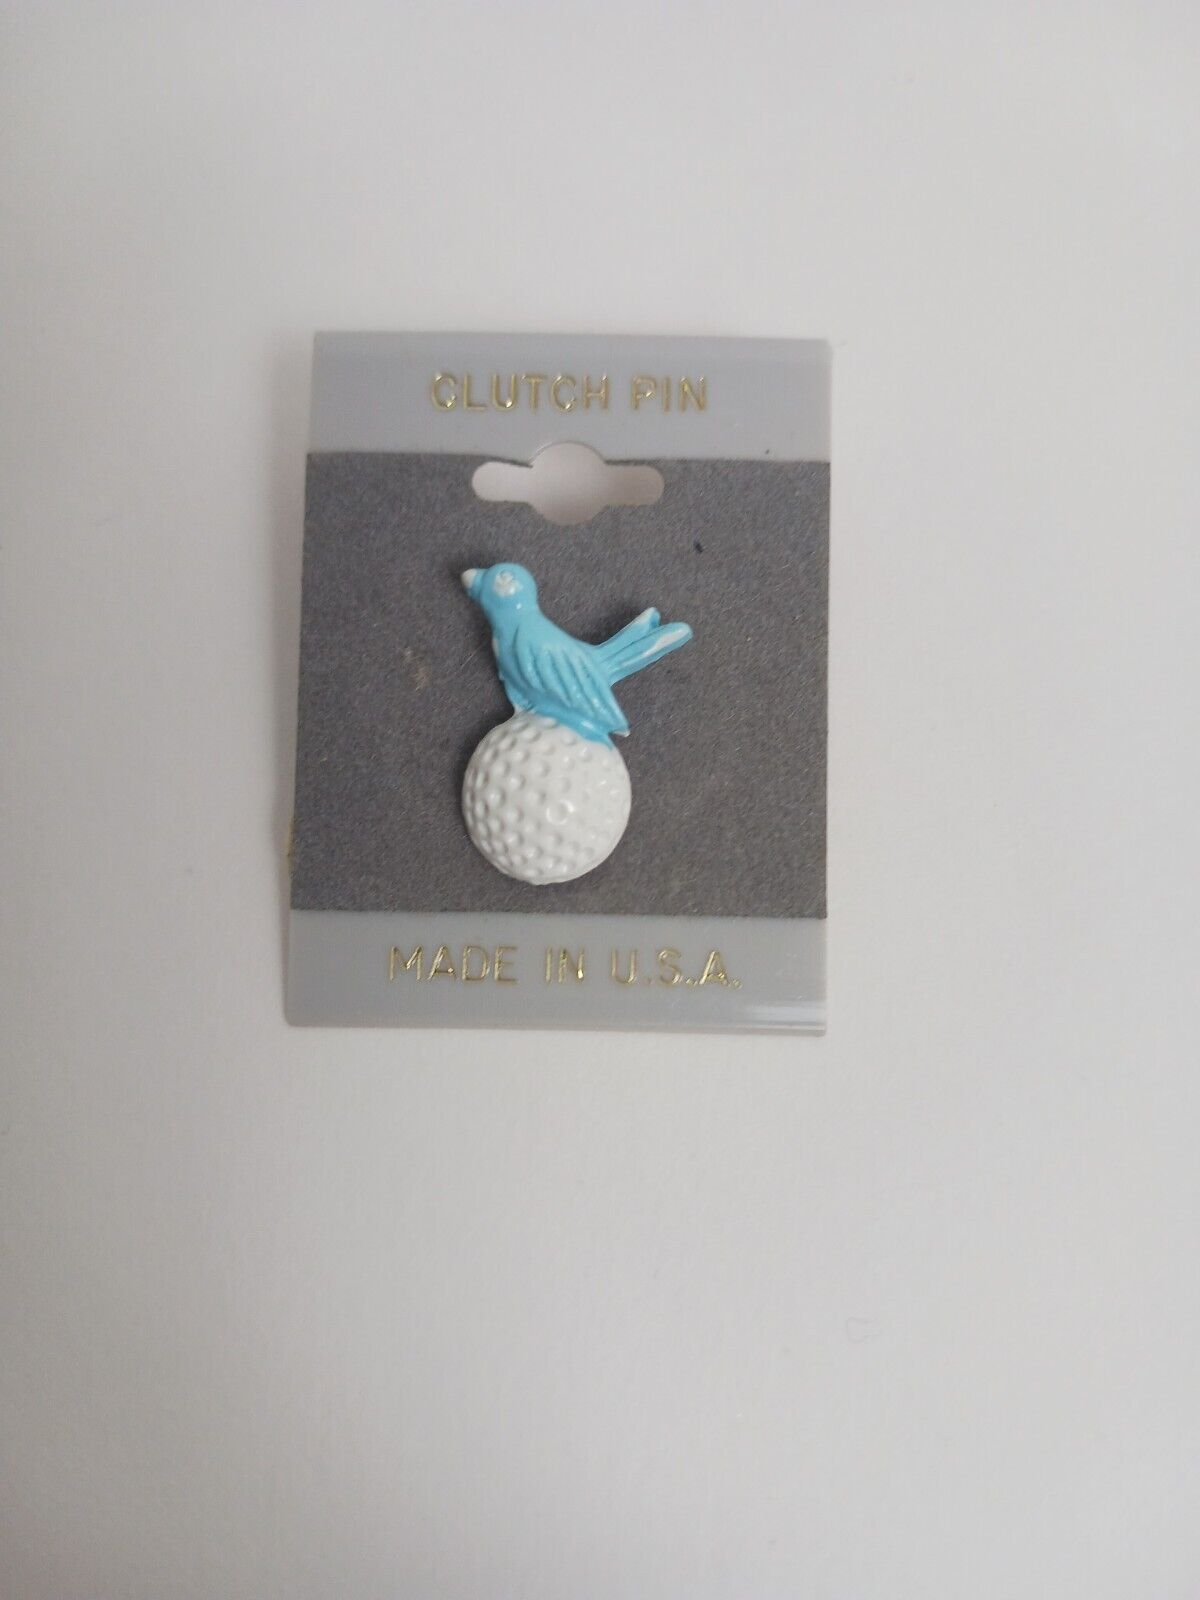 Vintage Blue Bird On Golf Ball Gold Tone Enamel Lapel Pin 